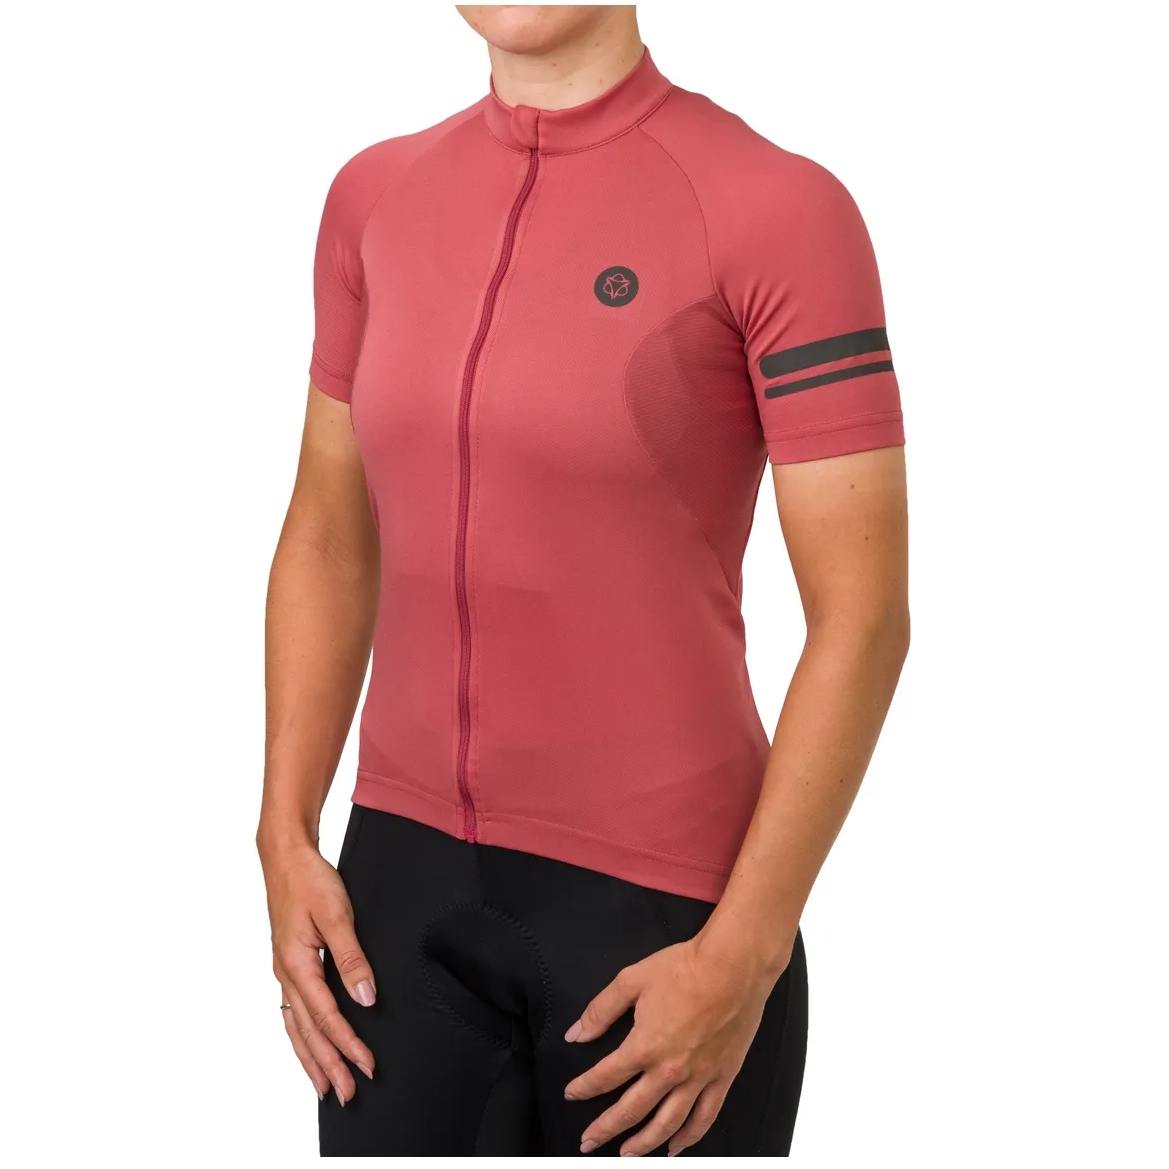 Produktbild von AGU Essential Core II Damen Kurzarm-Trikot - rusty pink